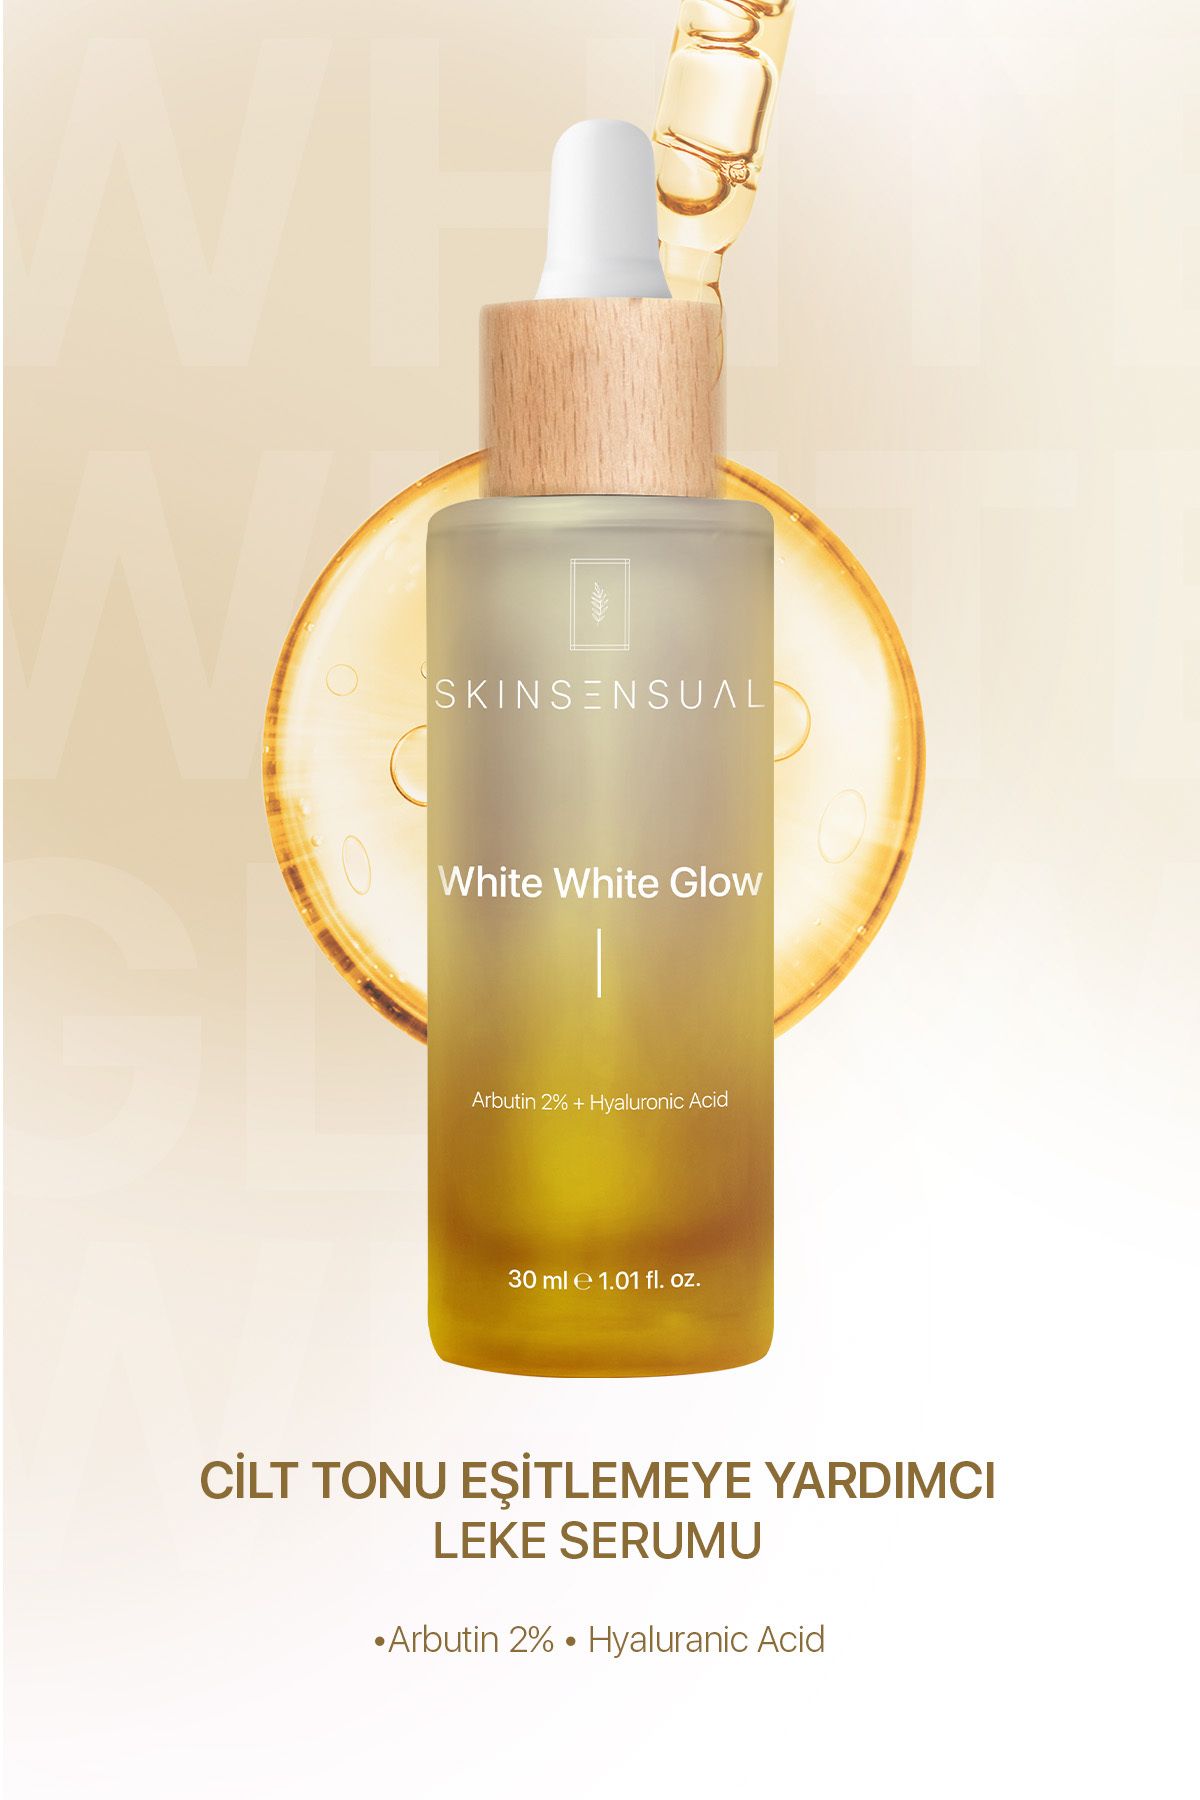 Skin Sensual White White Glow Leke Serumu (ARBUTİN %2 HYALURONİC ACİD) Cilt Tonu Eşitlemeye Yardımcı Serum